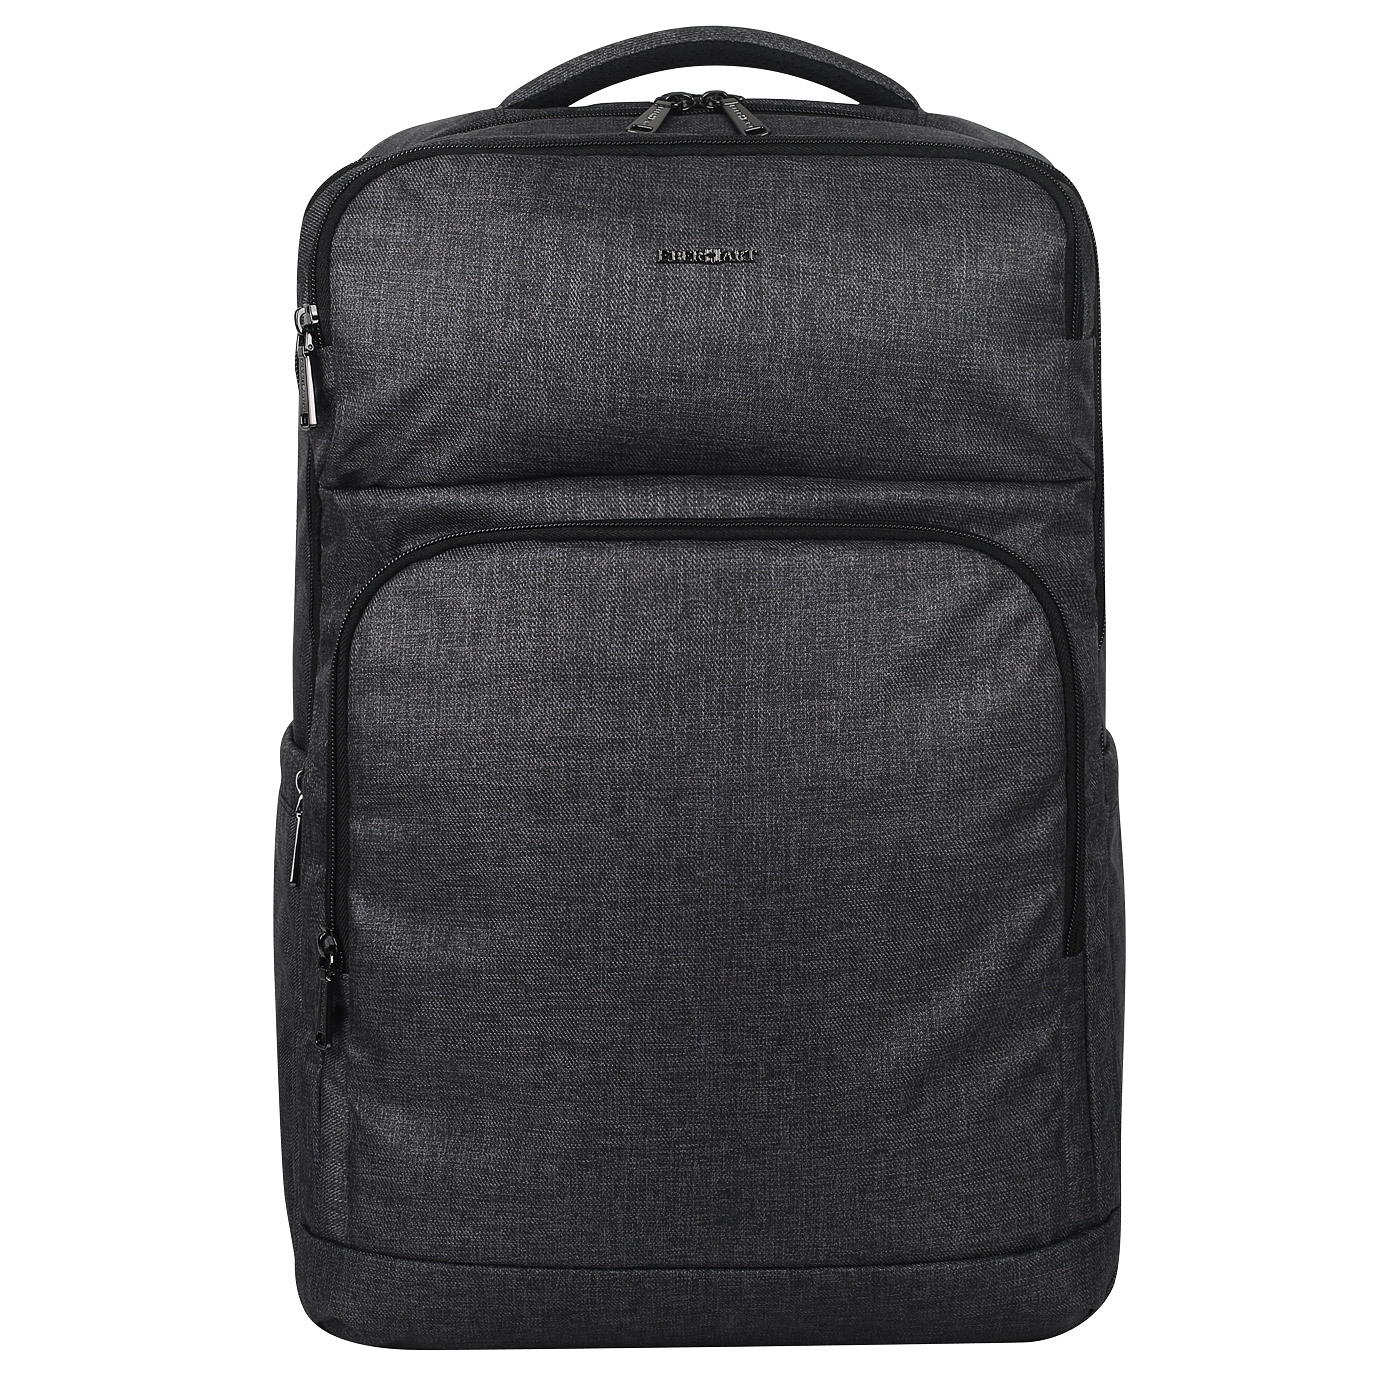 Рюкзак Eberhart Backpack темно-серый EBH19807-DG-17"